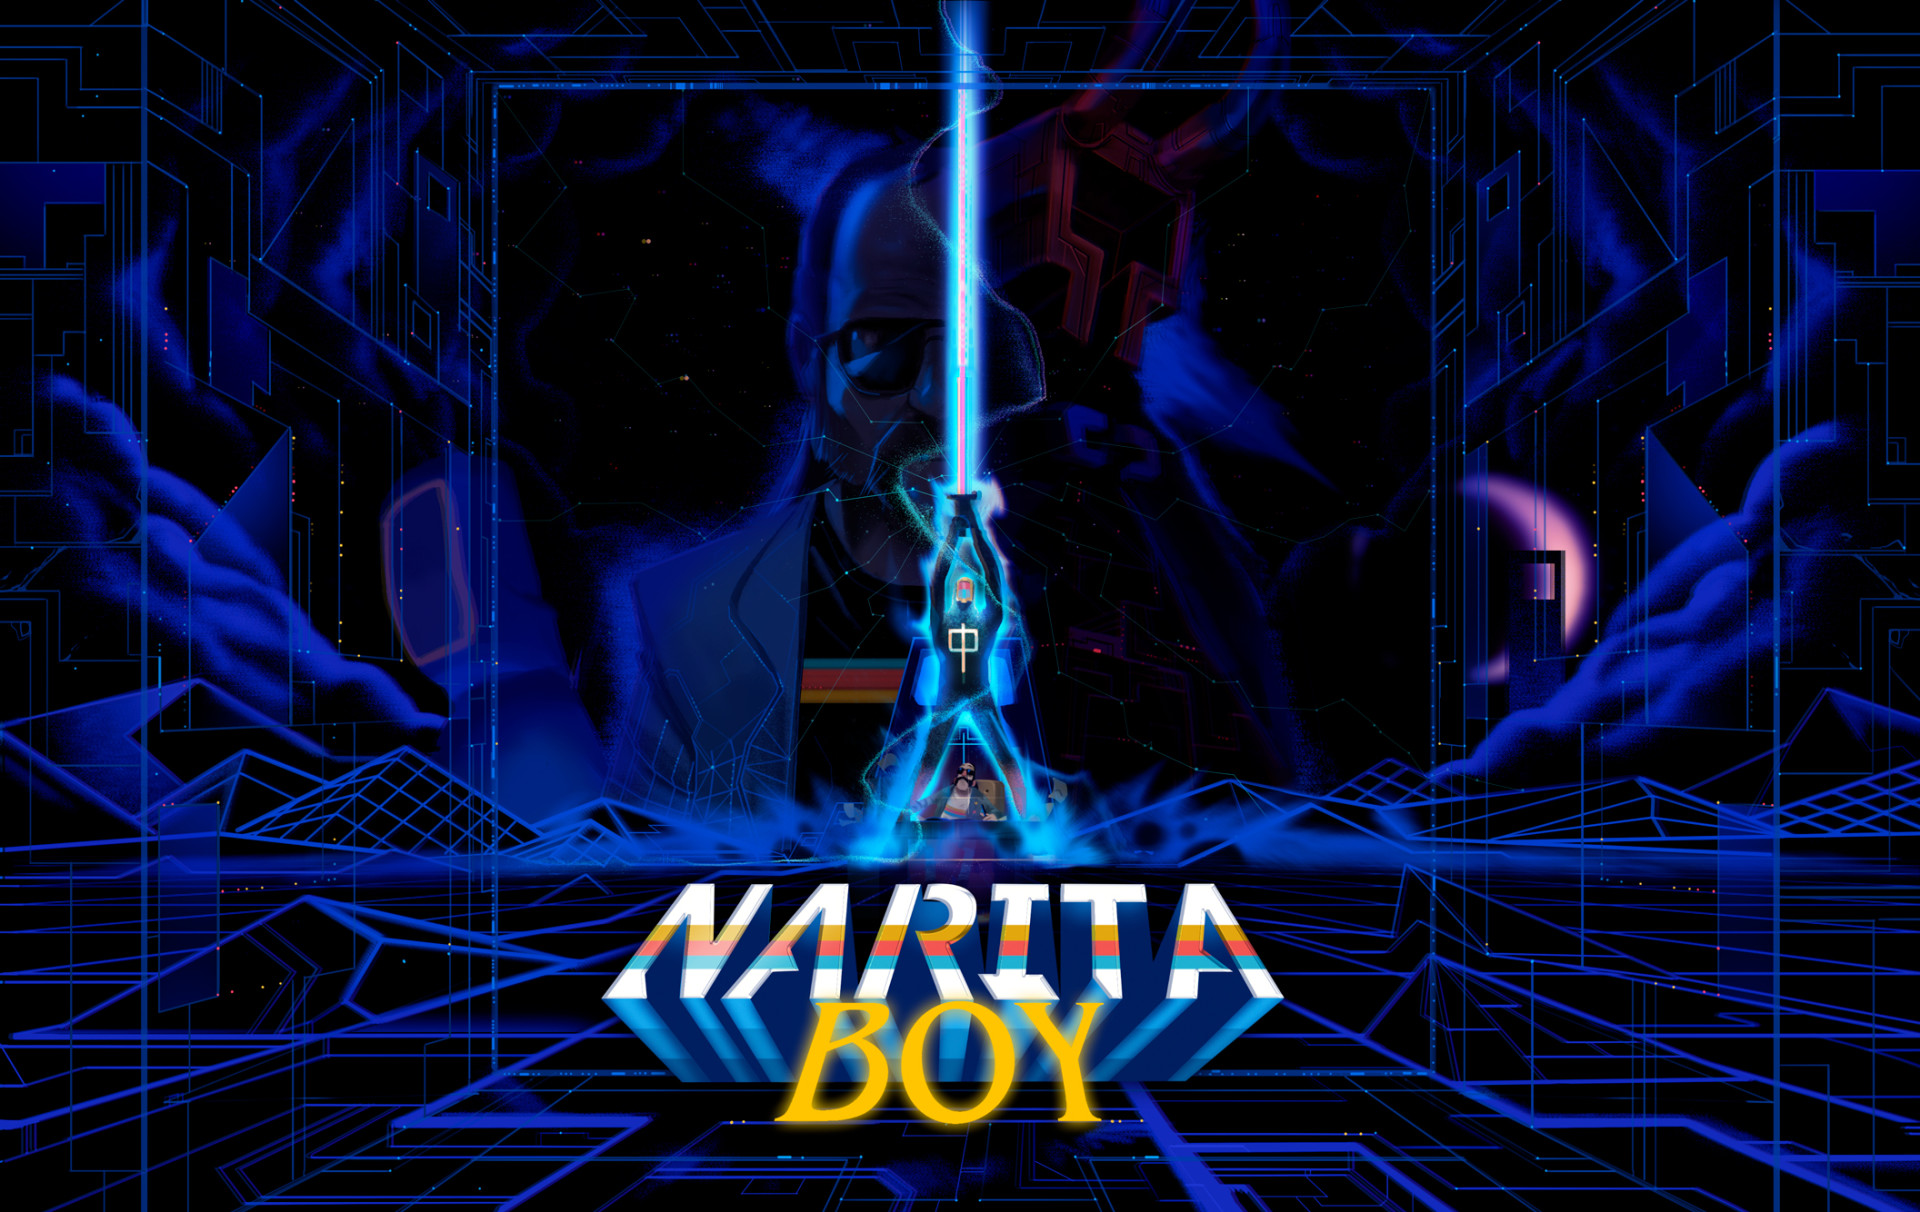 narita boy physical release